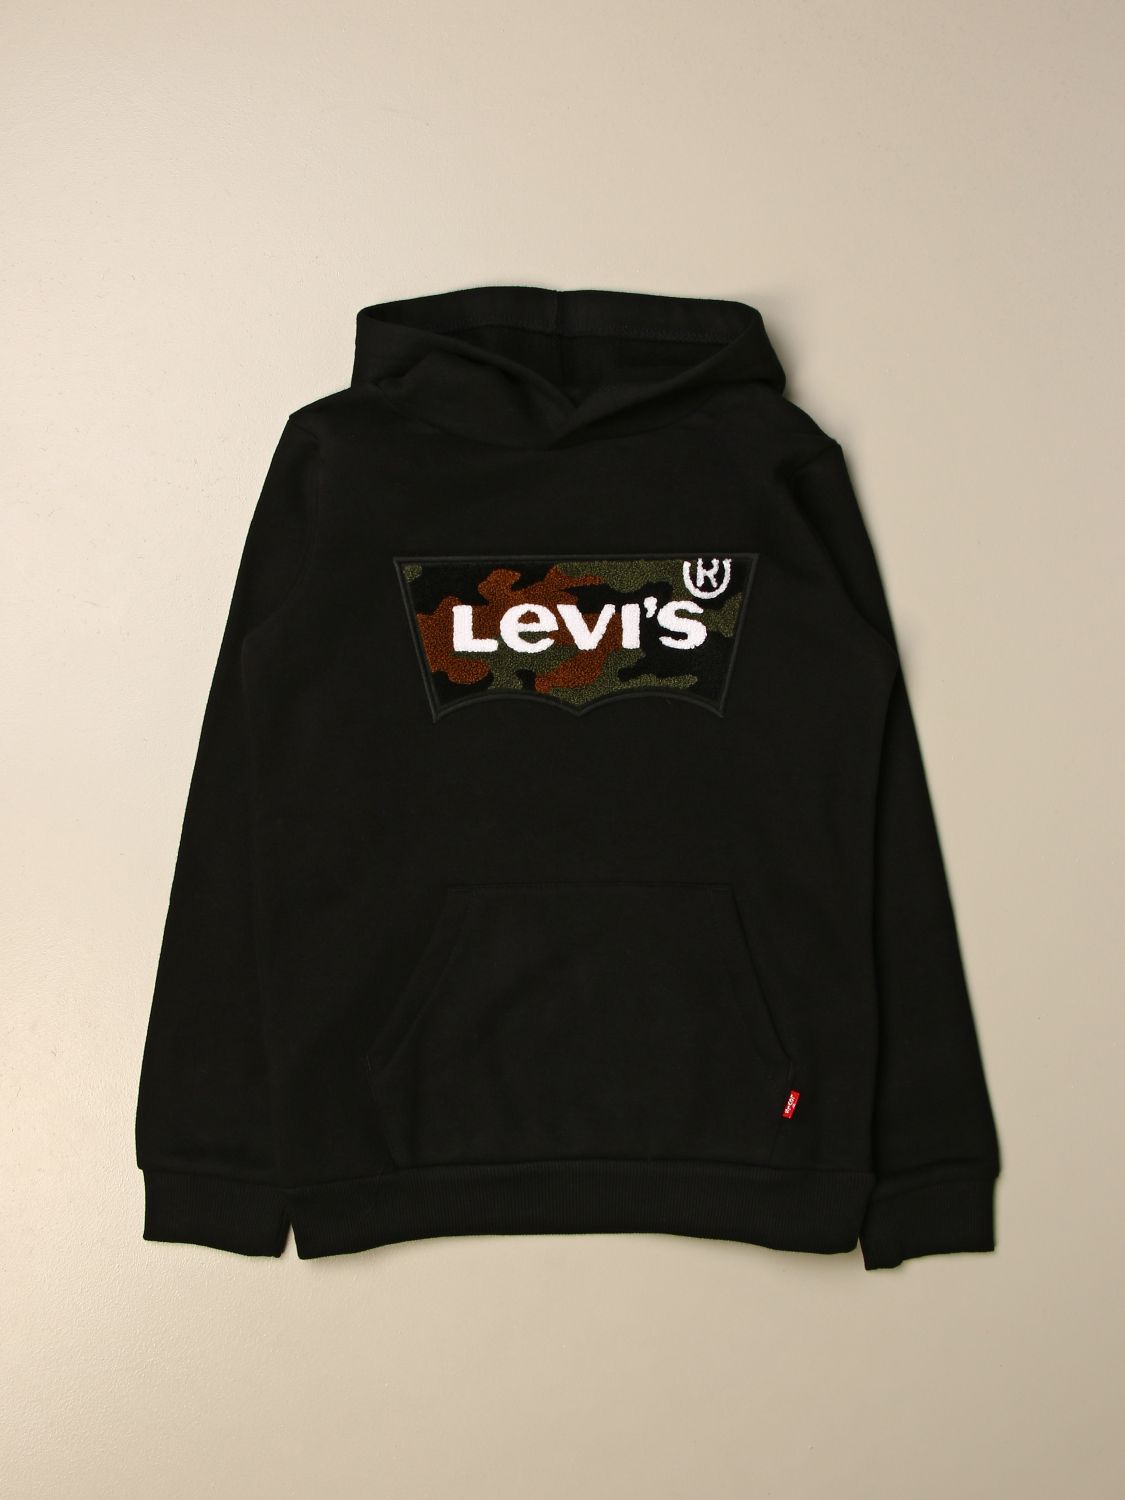 levis black jumper